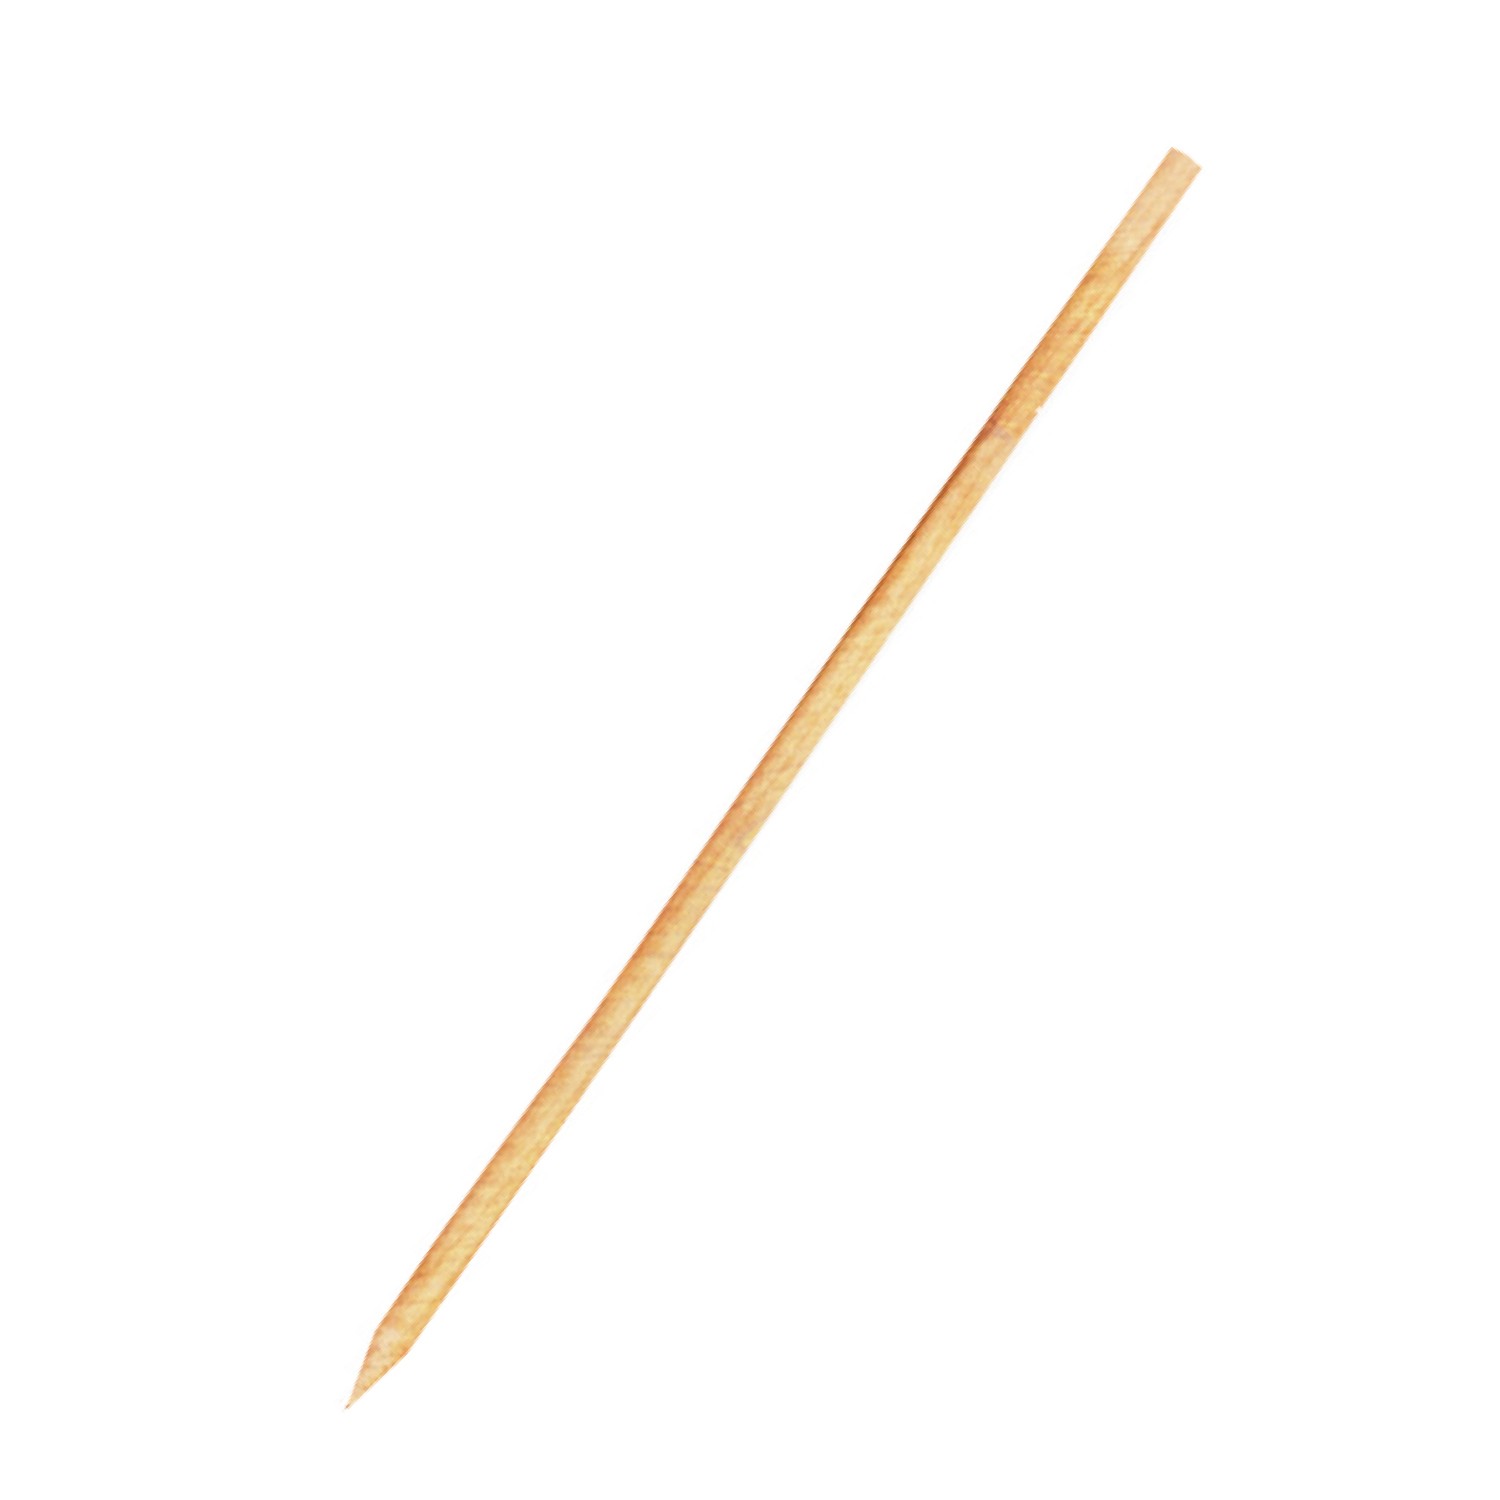 Bambusové špajdle ostré 15 cm, Ø 2,5 mm [200 ks]